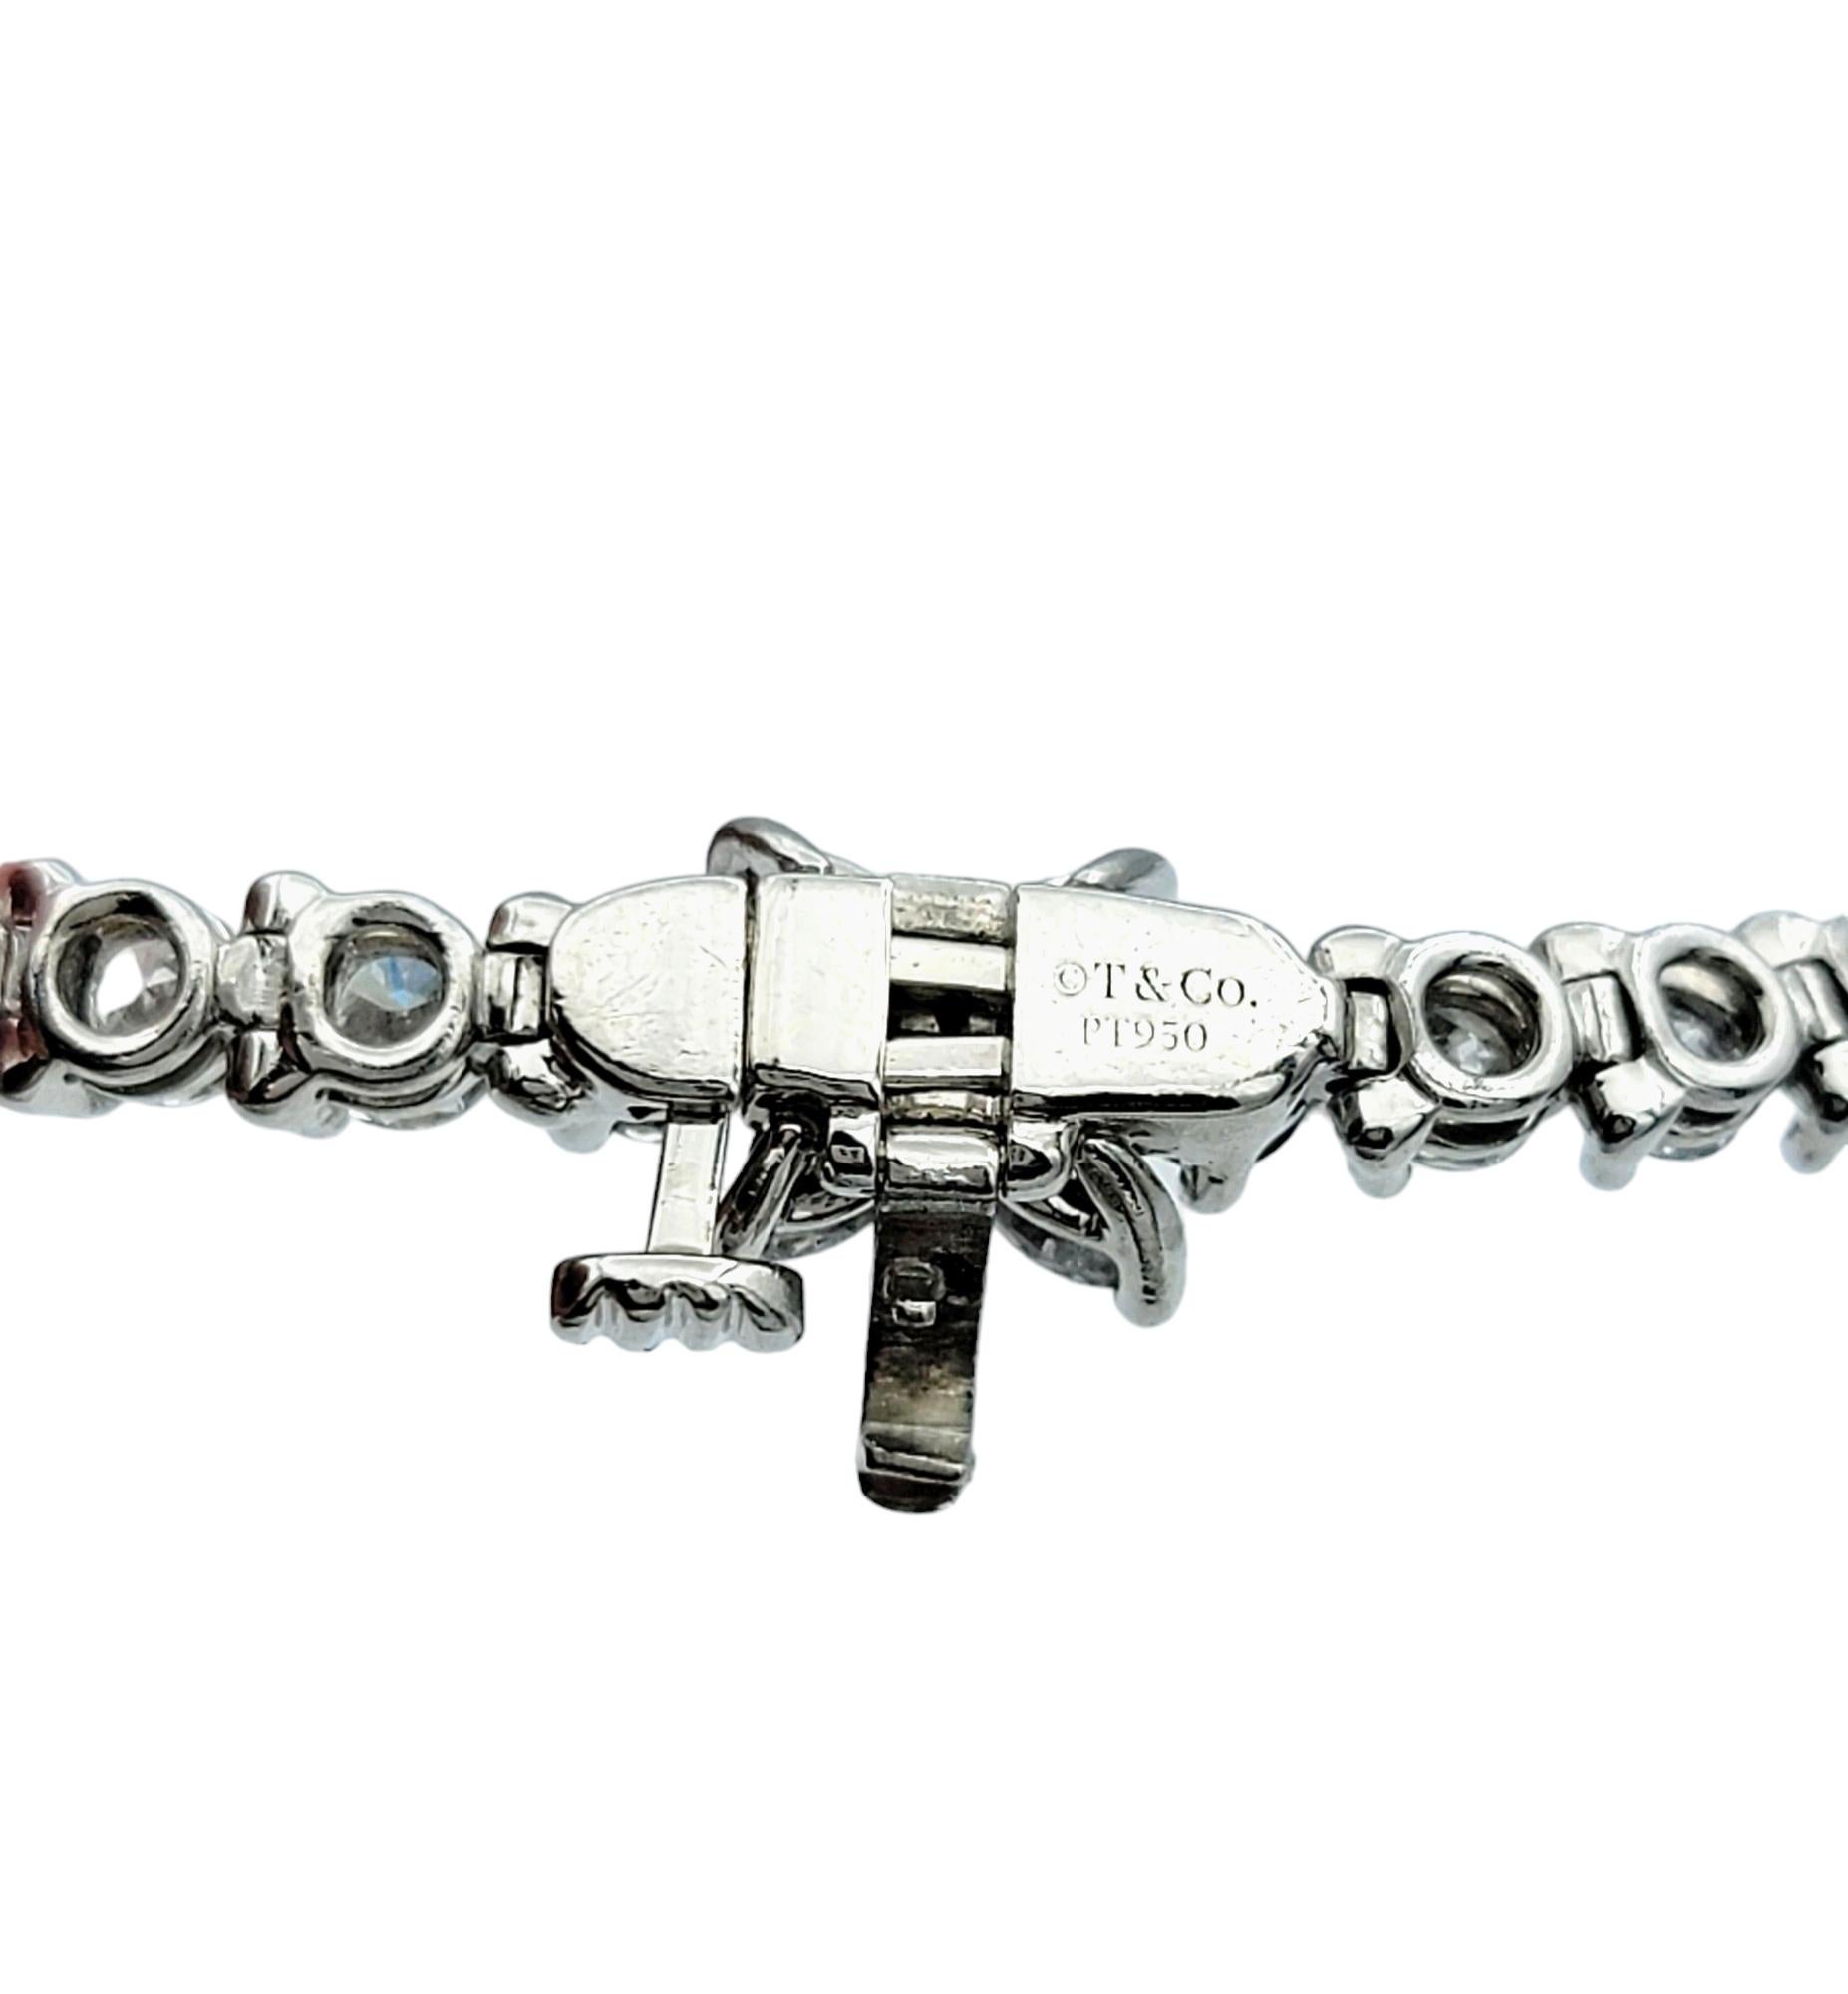 4.49 Carat Total Tiffany & Co. Victoria Diamond Tennis Bracelet Set in Platinum In Excellent Condition For Sale In Scottsdale, AZ